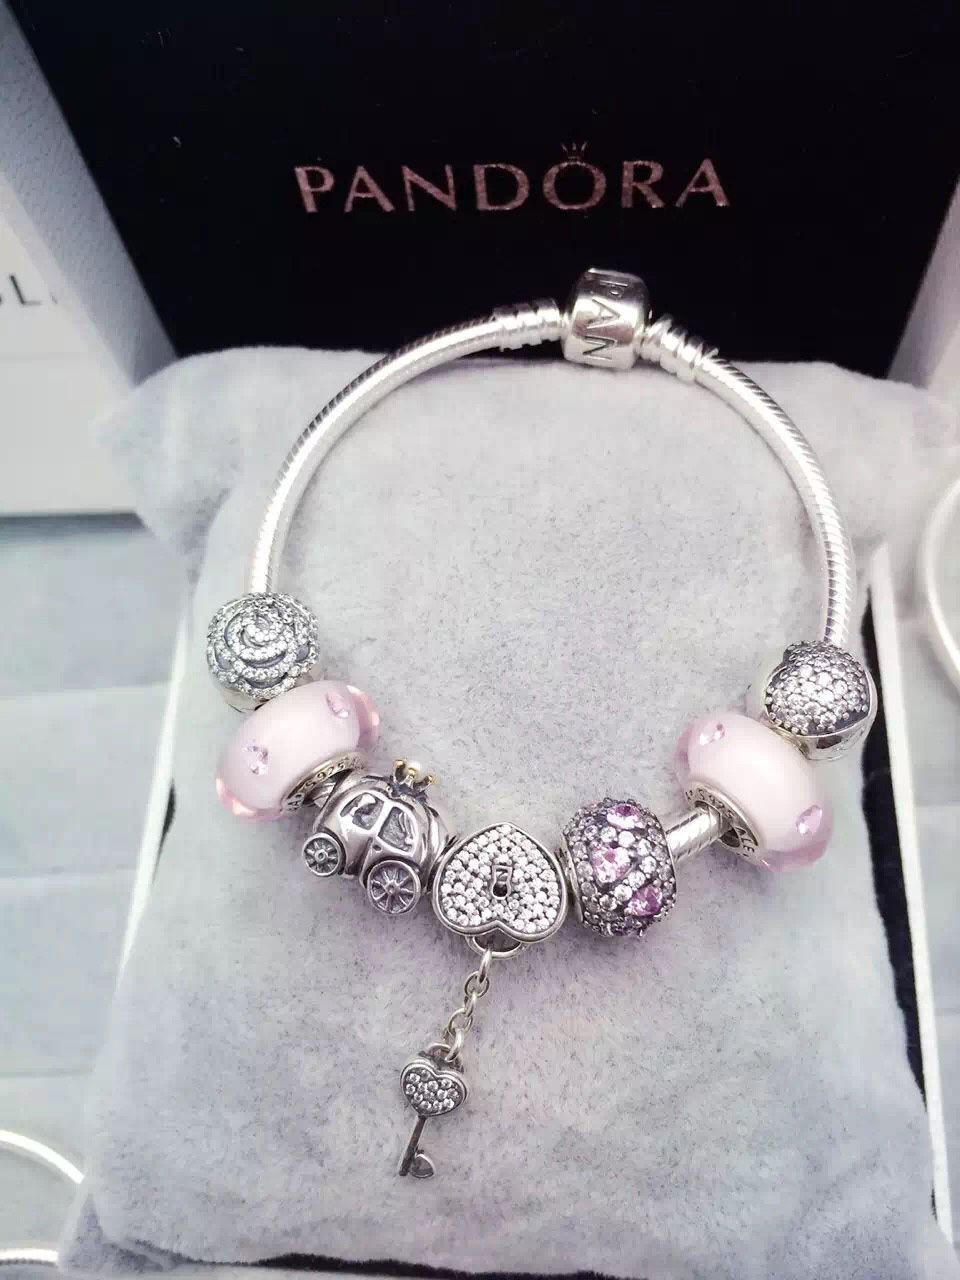 Pandora Bracelet Ideas
 OFF $199 Pandora Charm Bracelet Pink Hot Sale